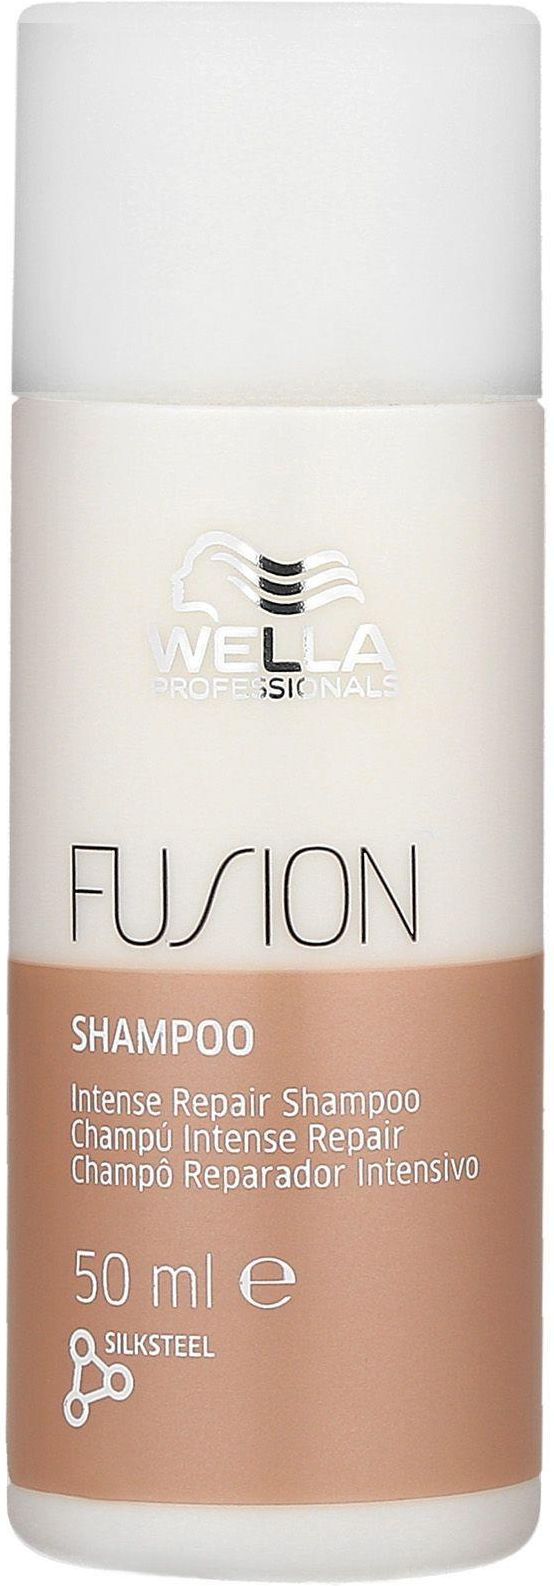 wella fusion szampon ceneo